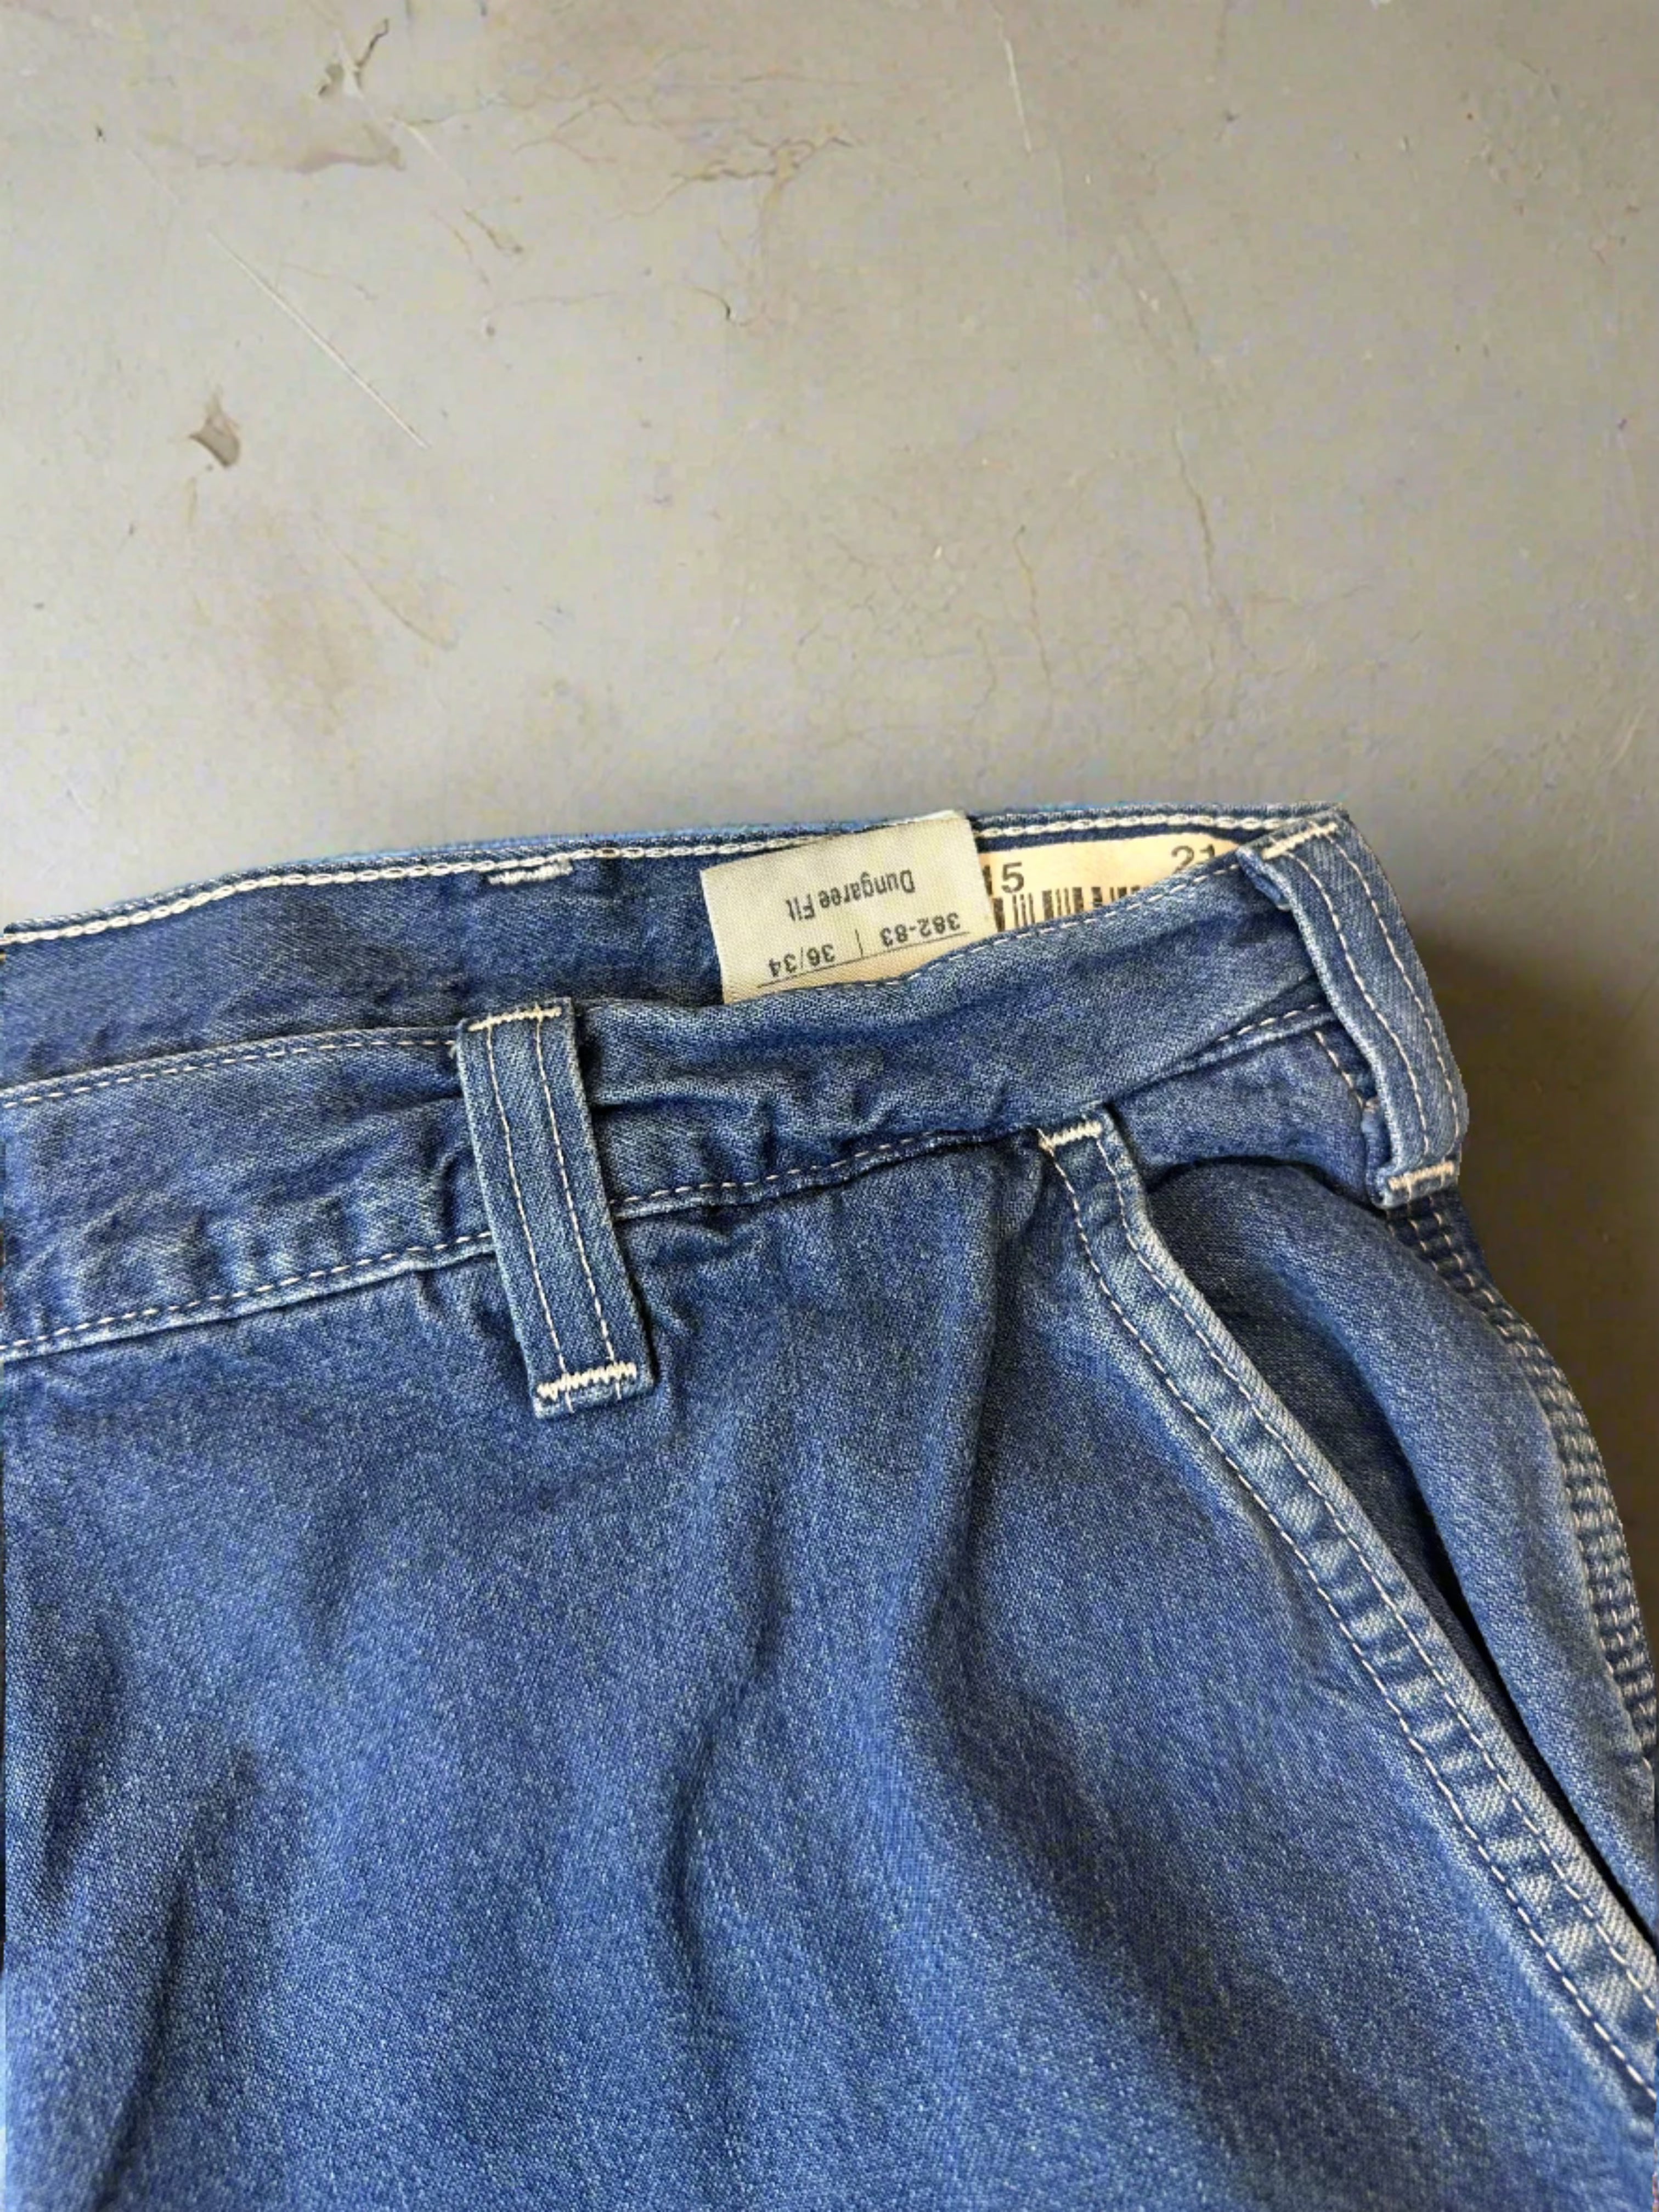 Vintage Carhartt Carpenter Pants - size 36x34